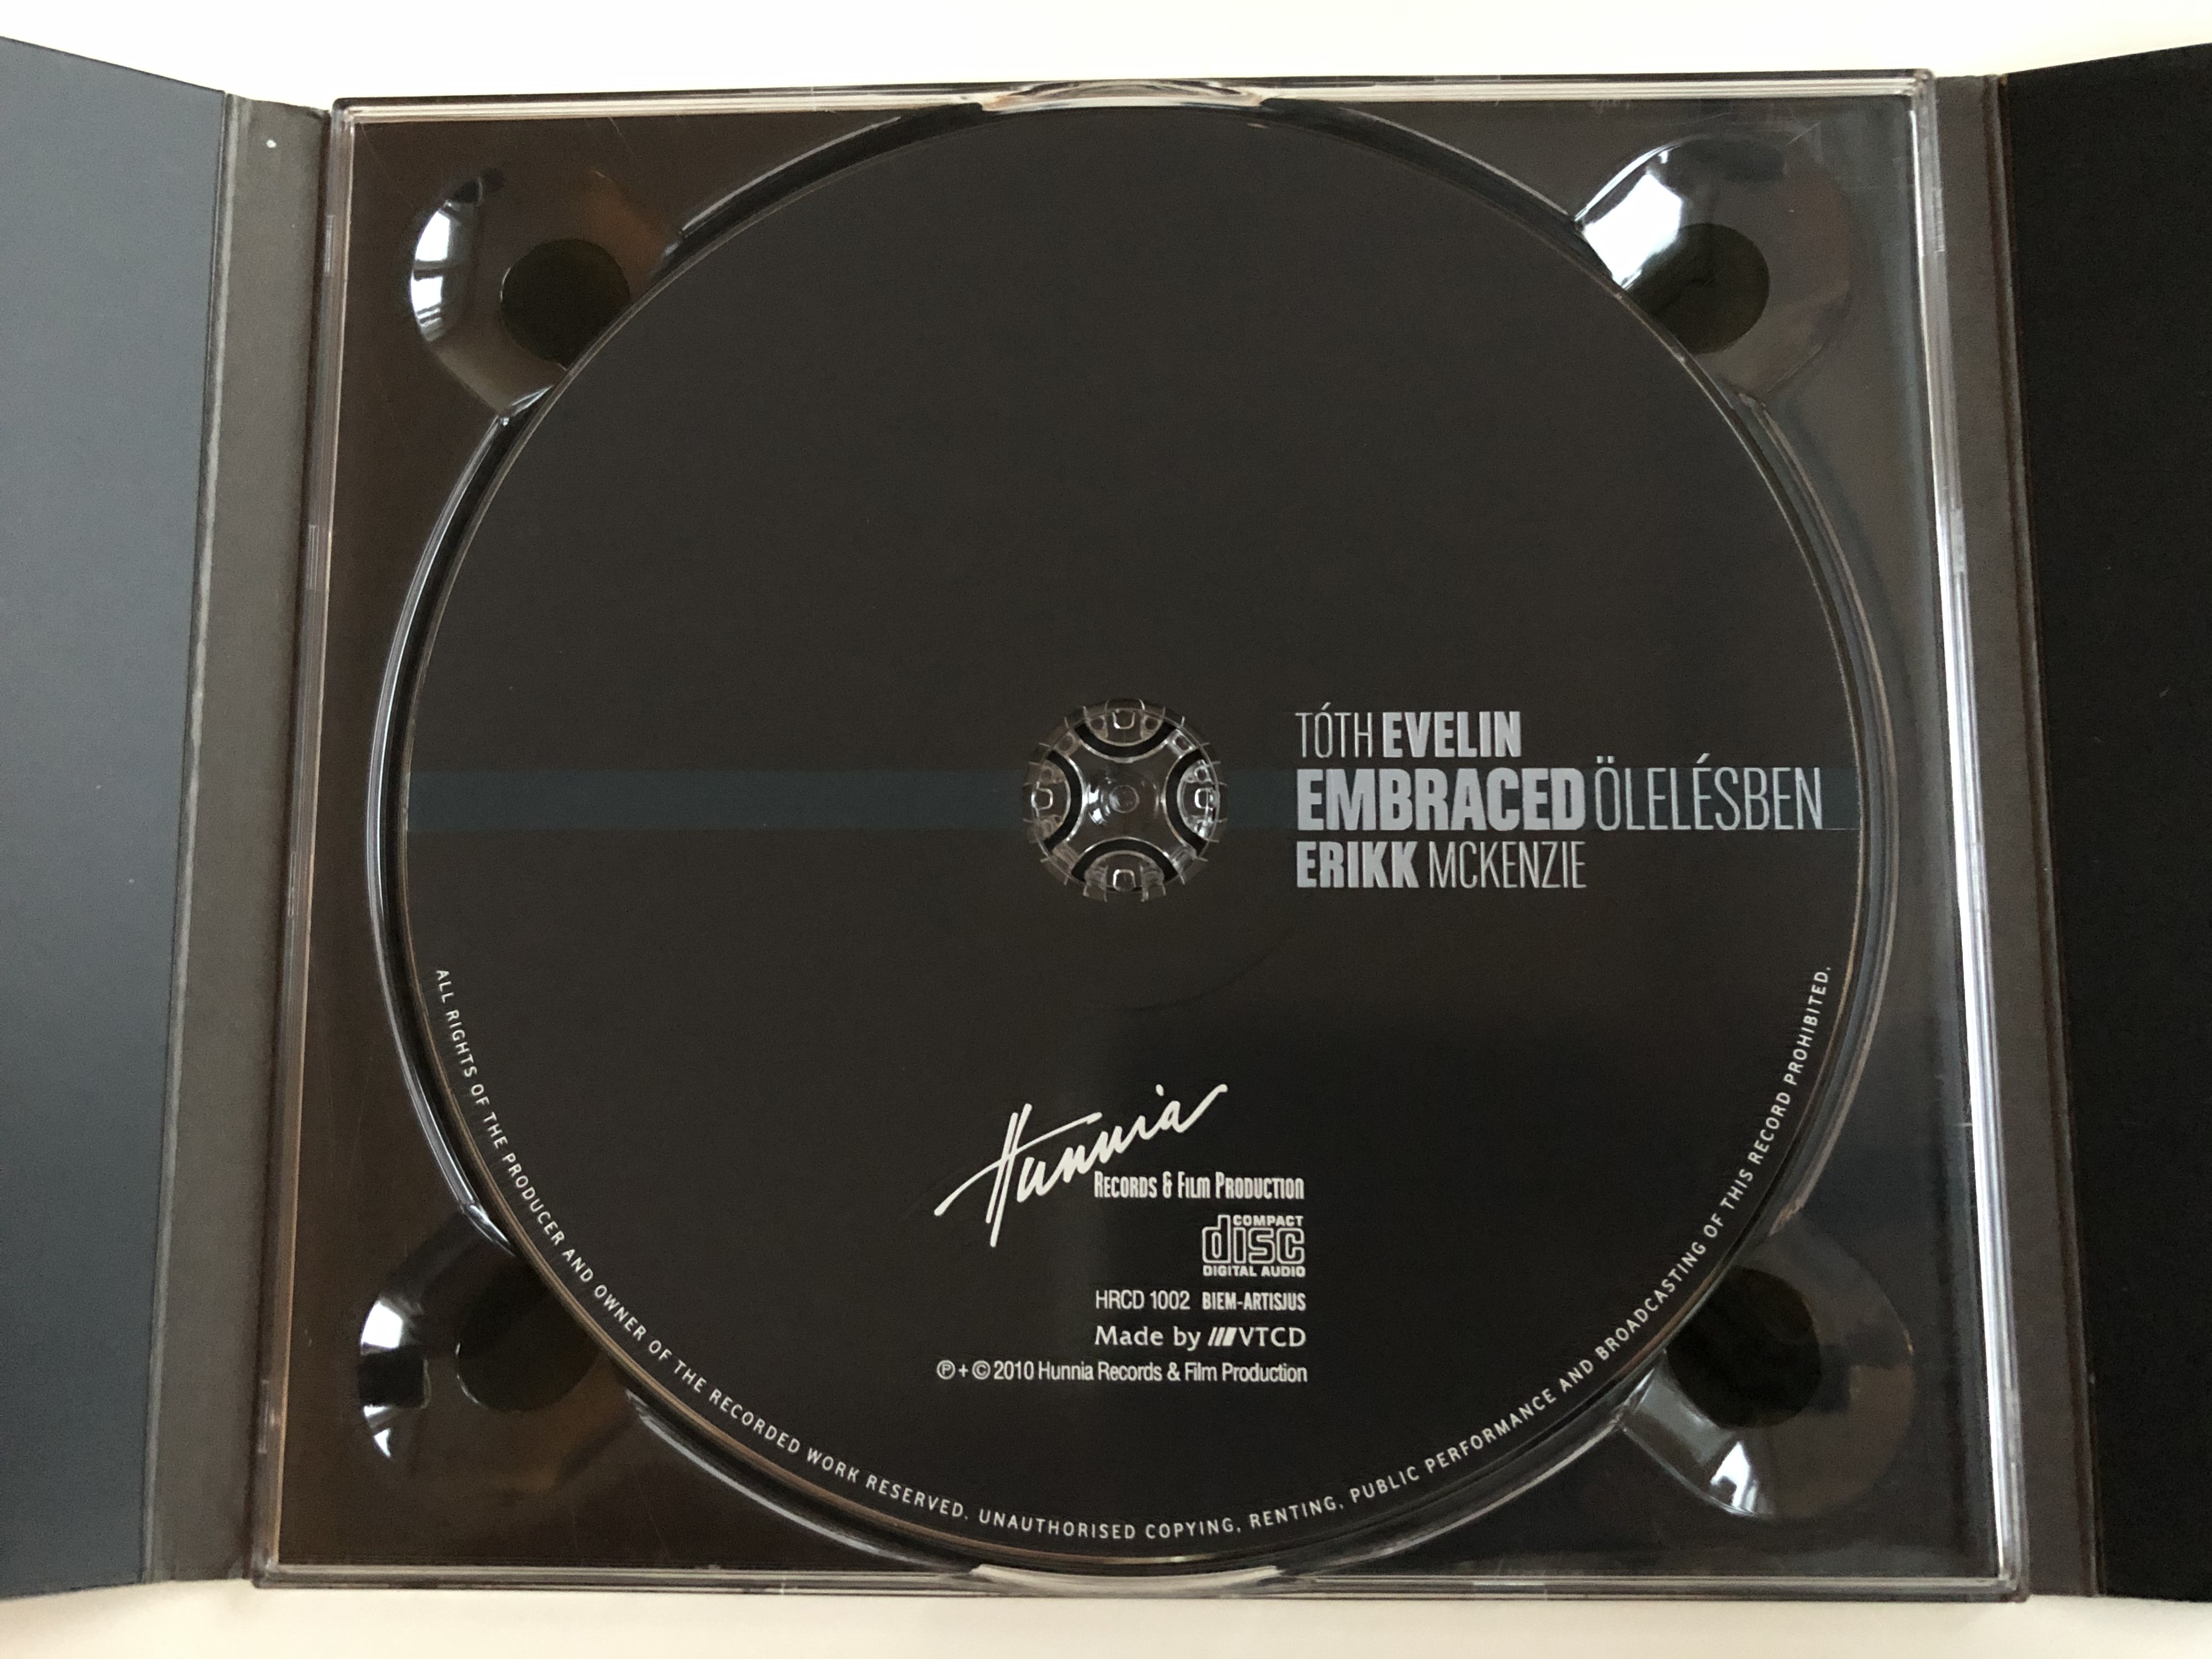 toth-evelin-erikk-mckenzie-embraced-olelesben-hunnia-records-film-production-audio-cd-2010-hrcd1002-3-.jpg